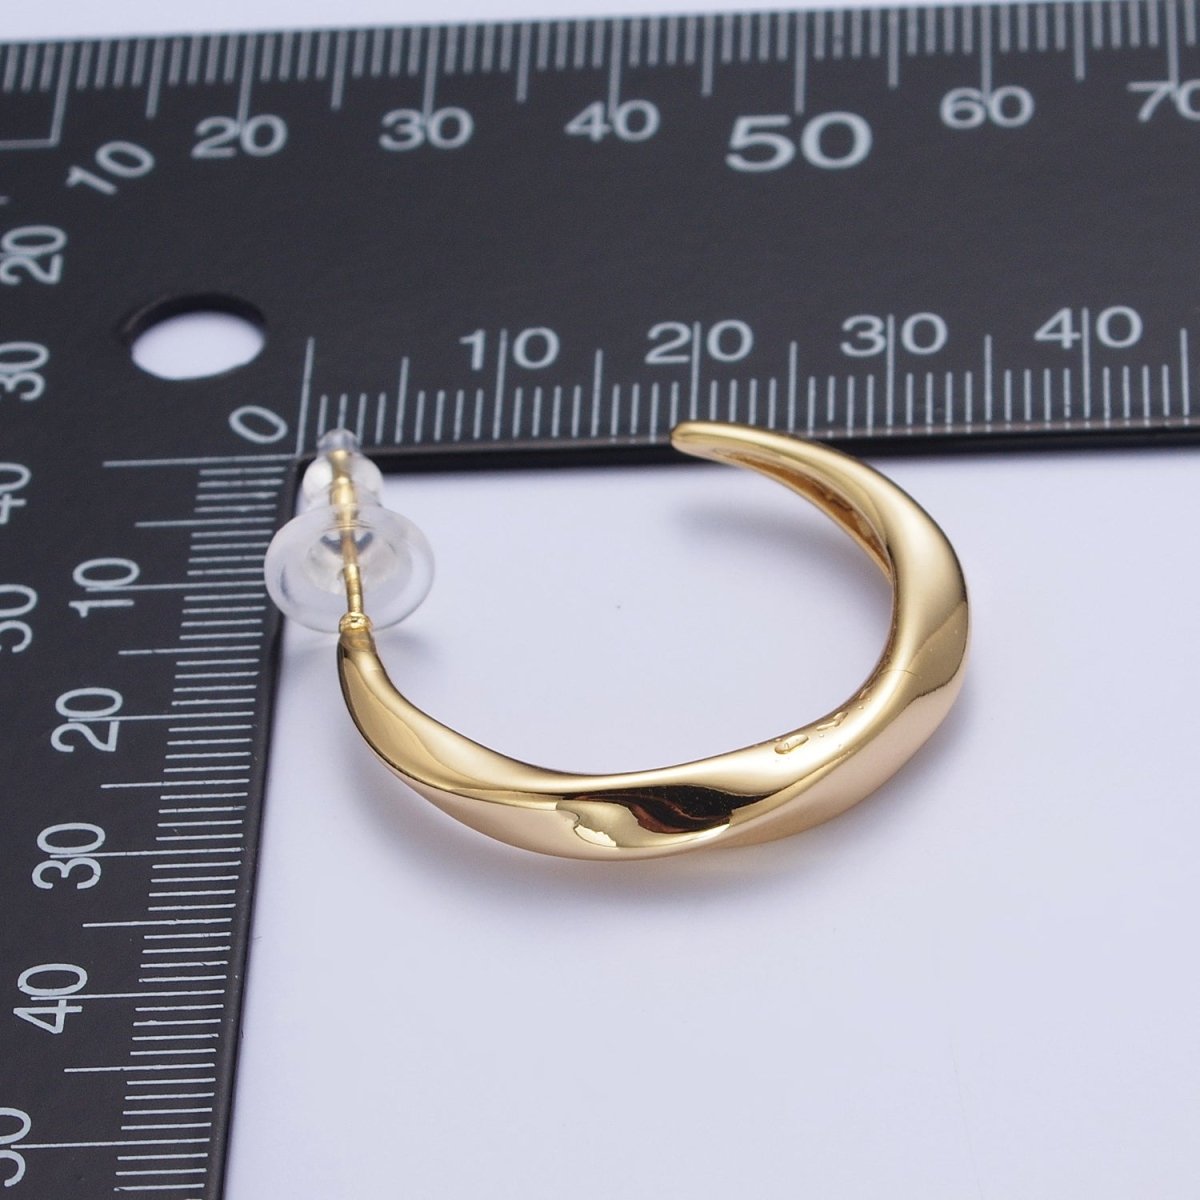 24K Gold Filled 30mm Twisted C Shaped Geometric Hoop Earrings | X-892 - DLUXCA